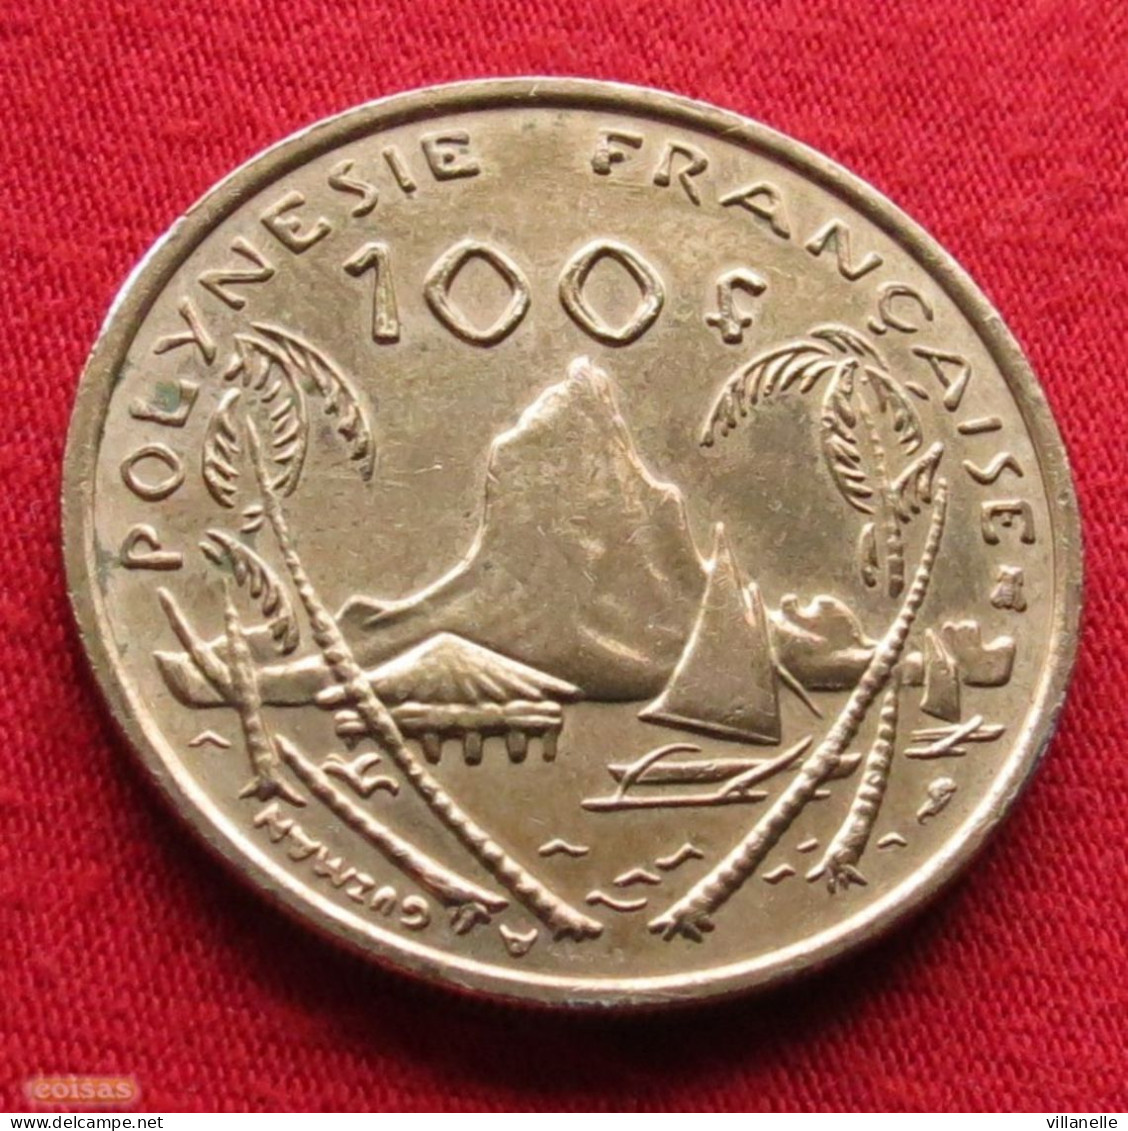 French Polynesia 100 Francs 1995 KM# 14 *V2T Polynesie Polinesia - French Polynesia